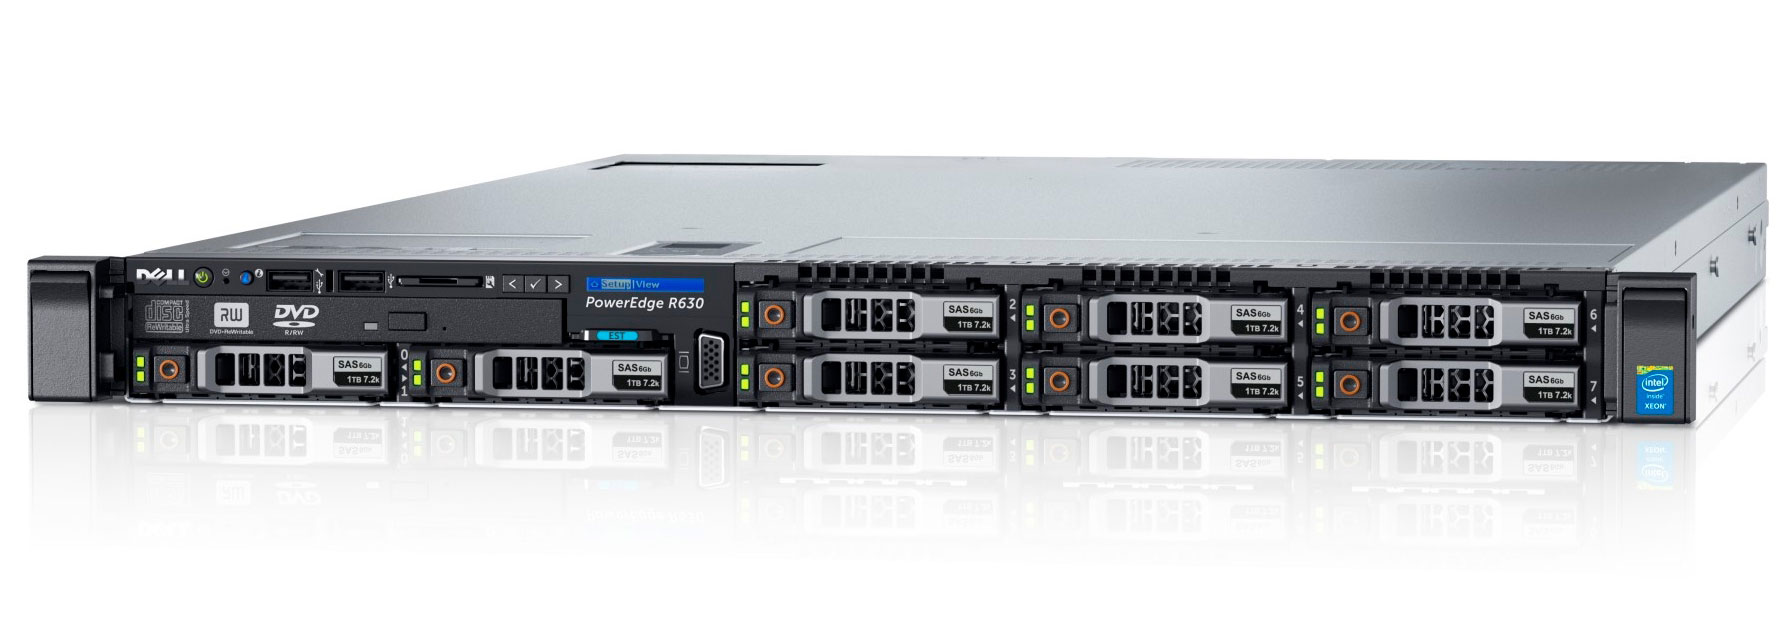 Подробное фото Сервер DELL PowerEdge R630 2x Xeon E5-2690v4 192Gb 2133P DDR4 8x noHDD 2.5", SAS RAID Perc H730, 1024Mb, DVD, 2*PSU